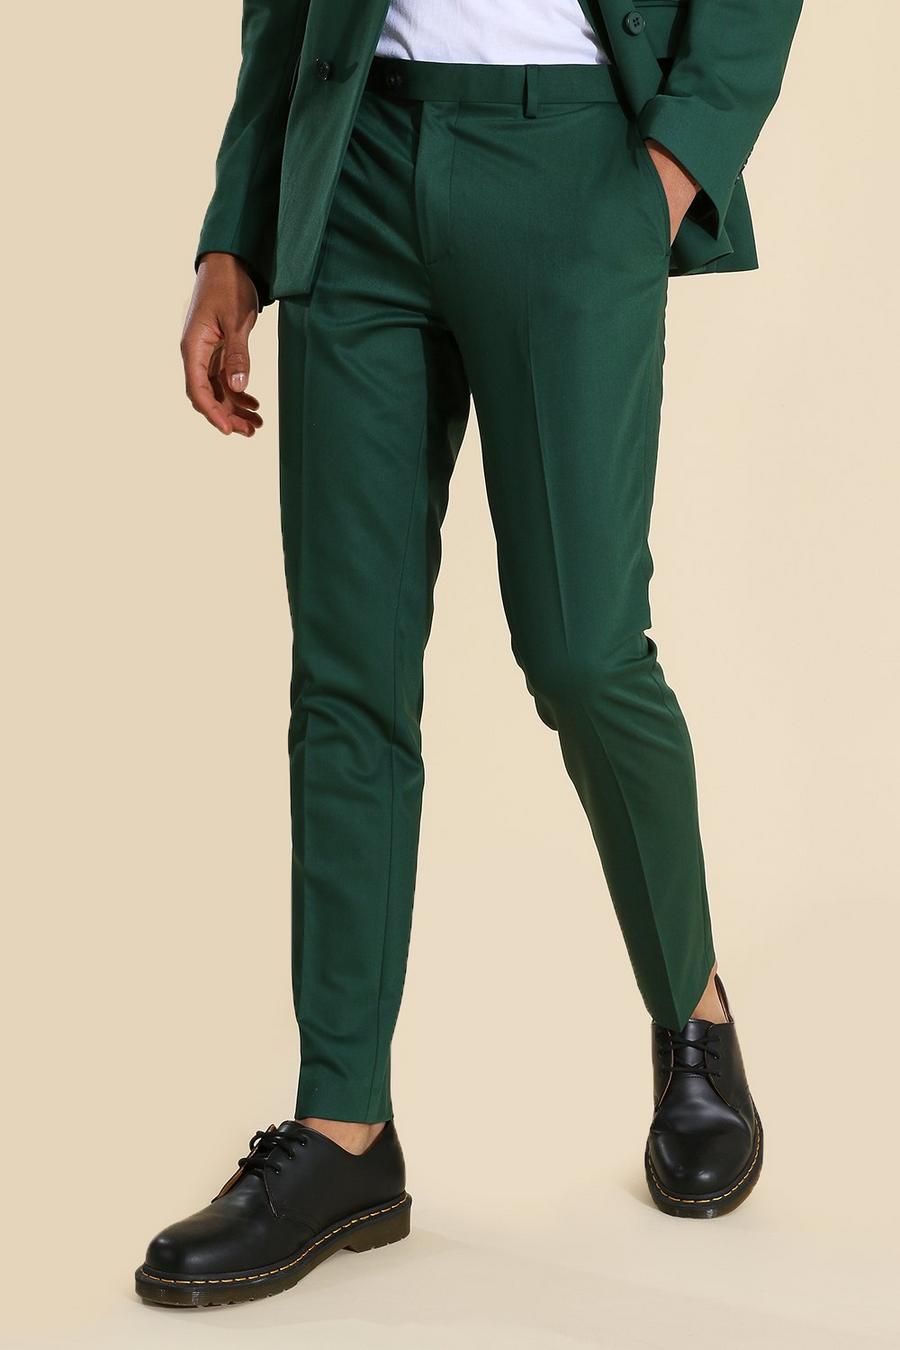 Green trouser suit